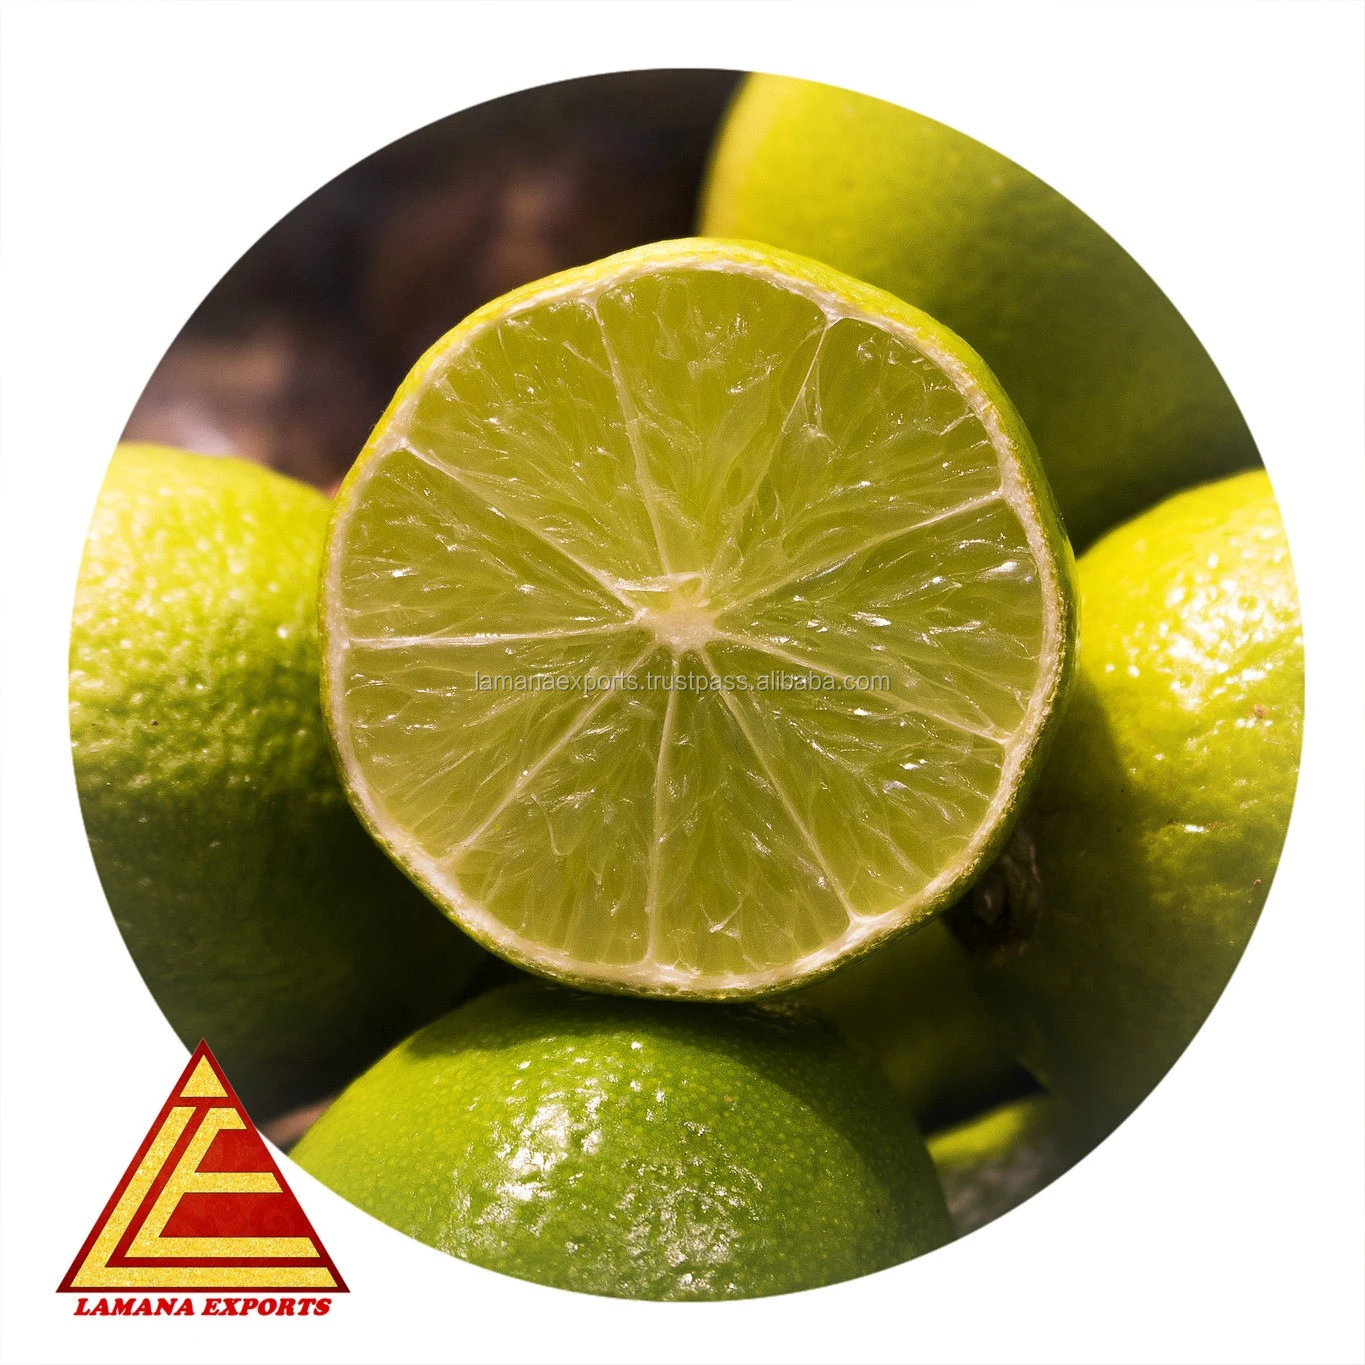 Lemon for Export Vietnam Malaysia Singapore Fresh Green Citrus Fruit COMMON